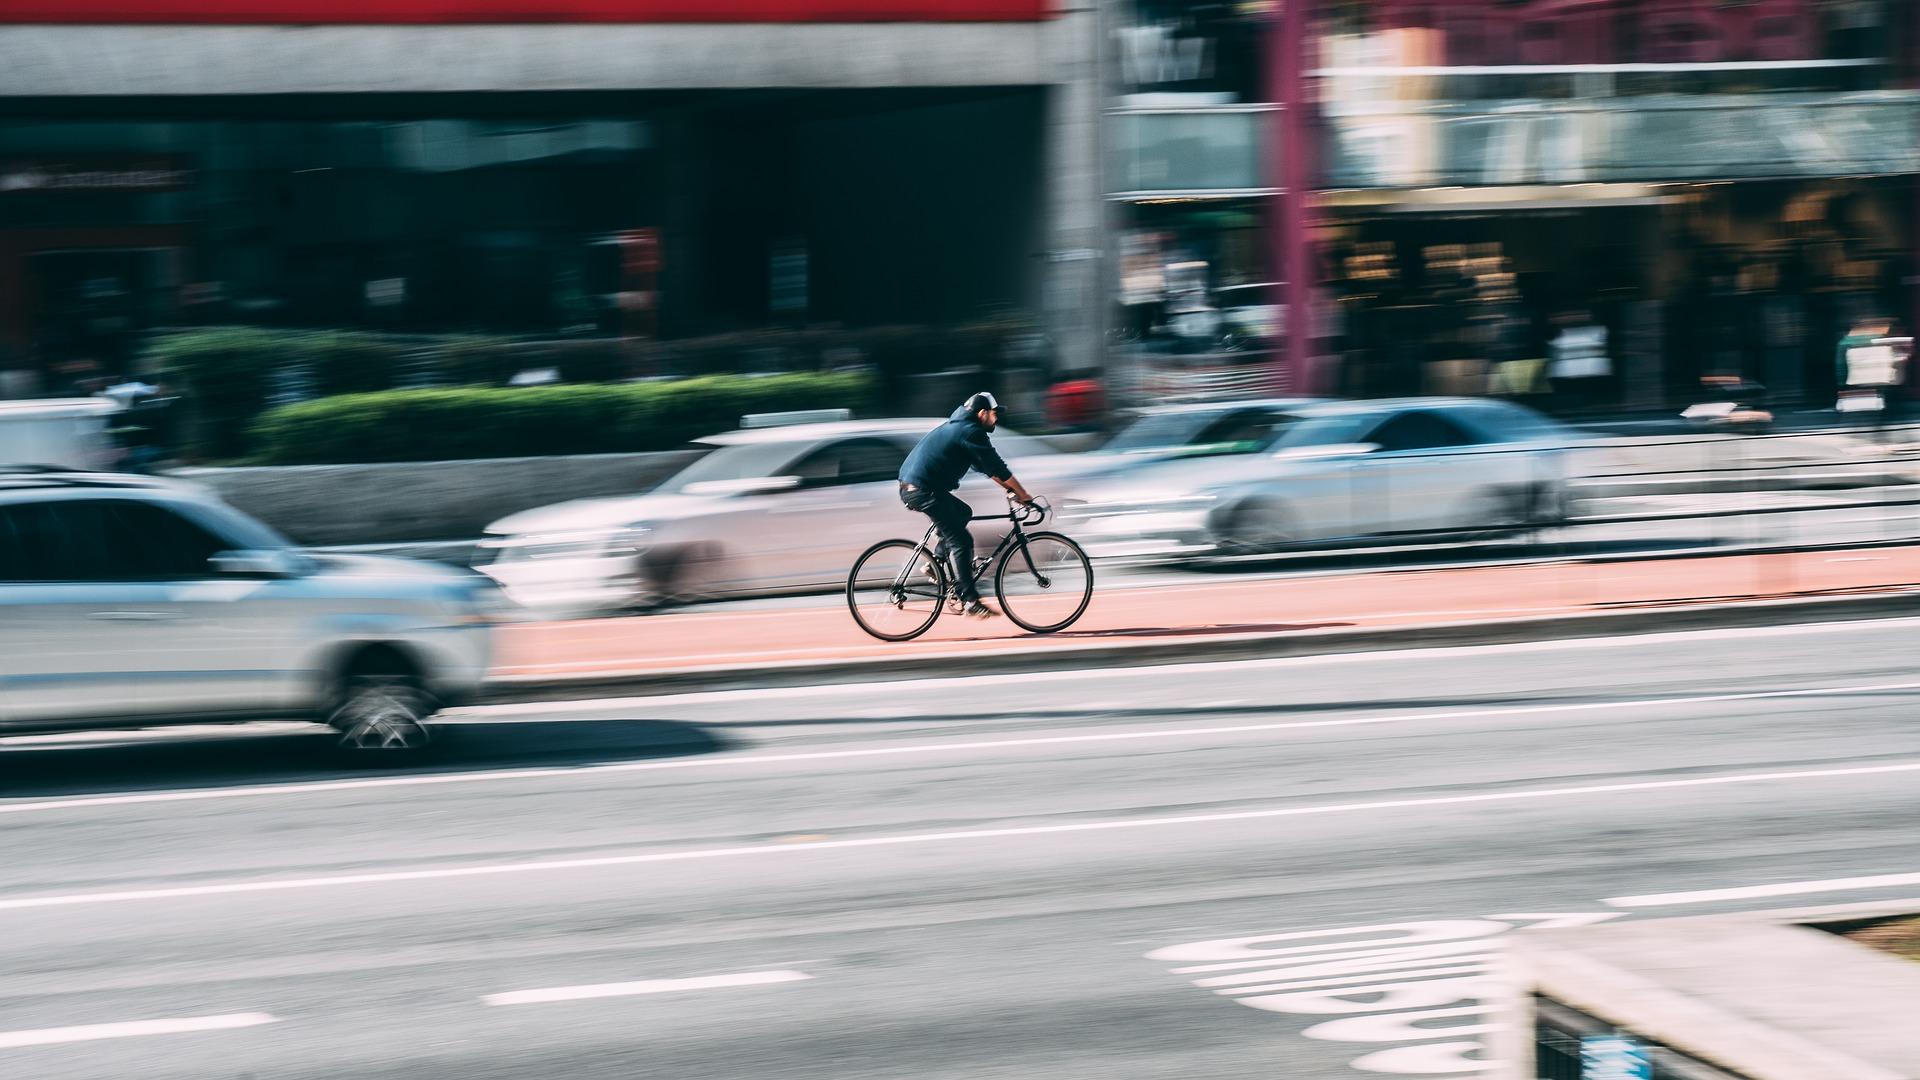 Man on bike with blur of traffic behind him